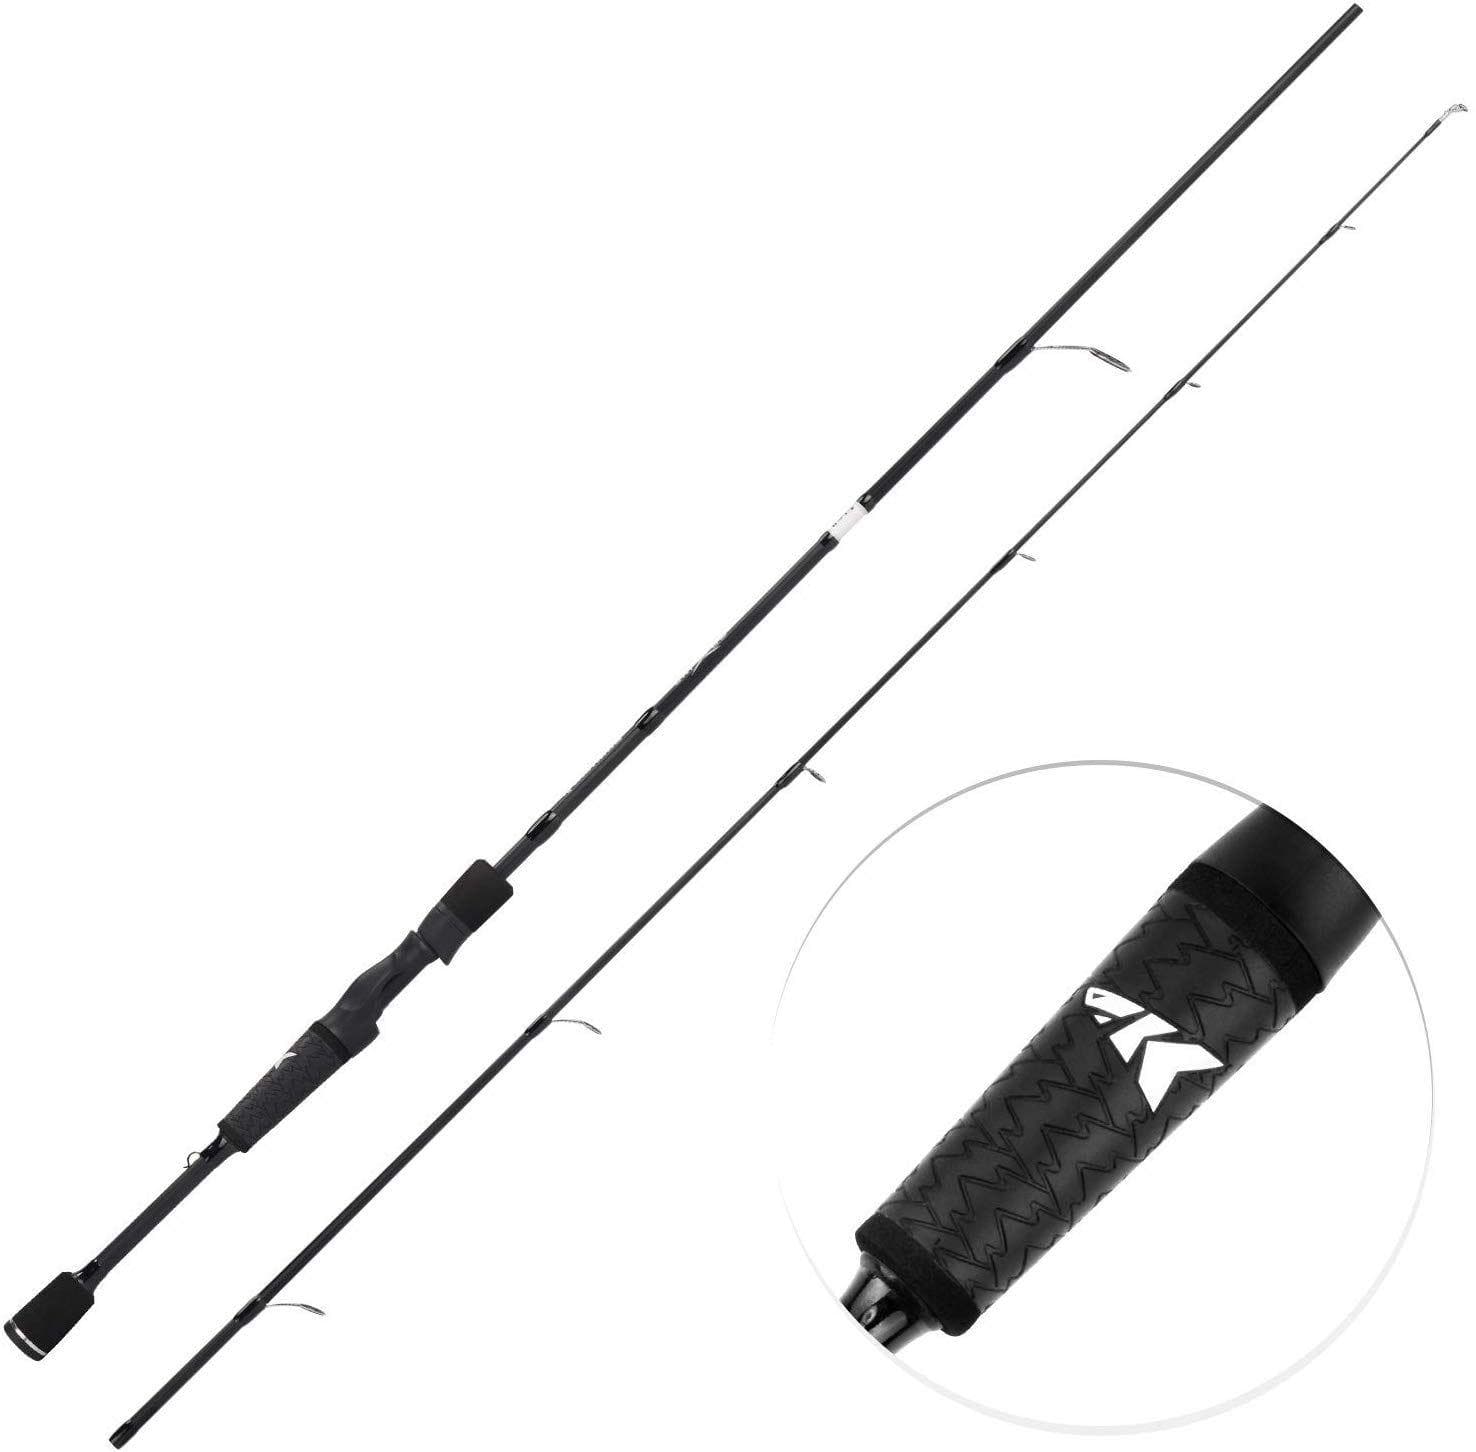 KastKing Crixus Fishing Rods,IM6 Graphite Spinning Rod & Casting